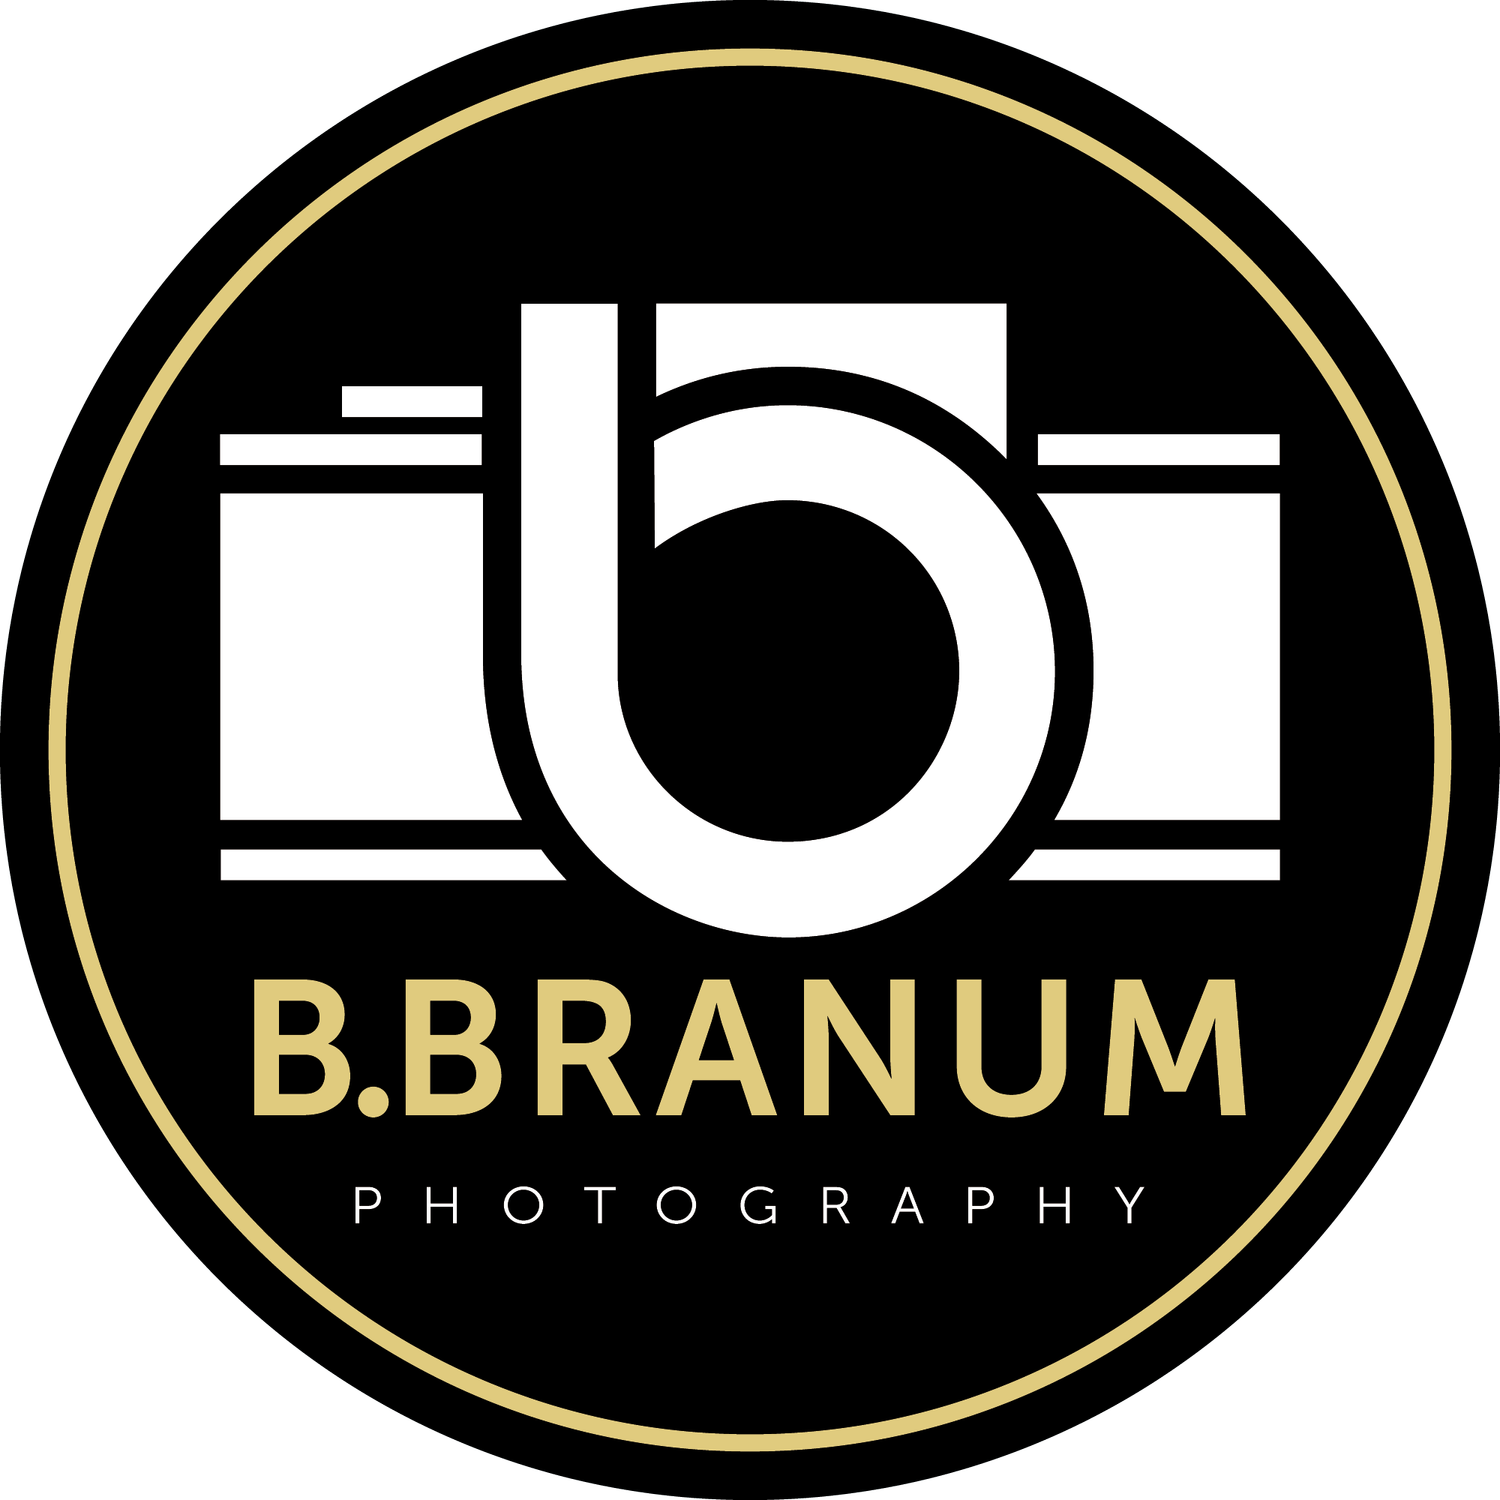 B.Branum Photography